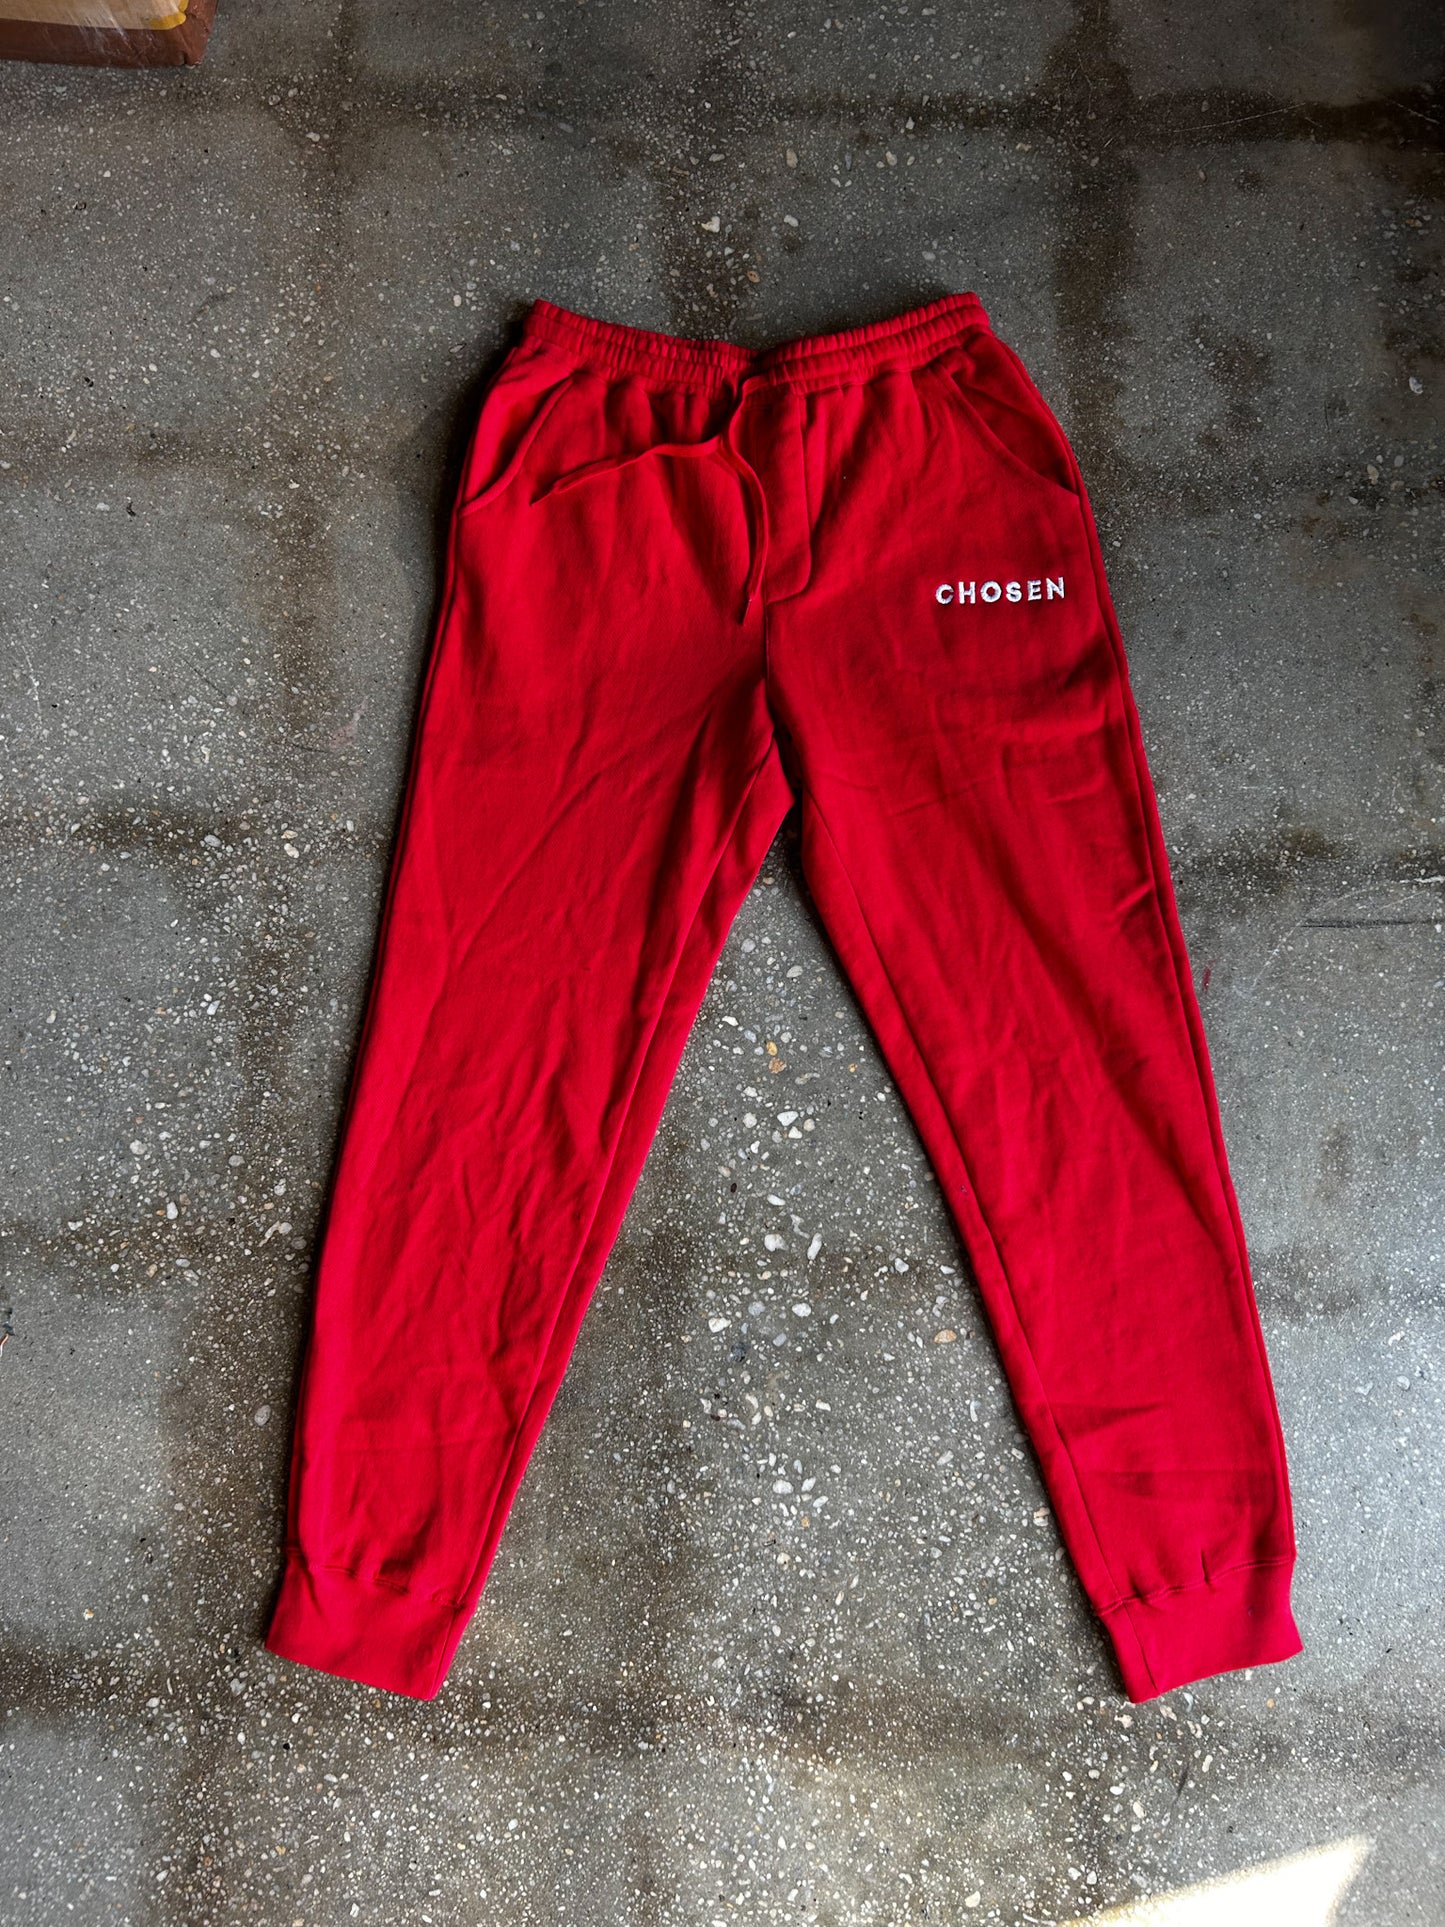 Chosen Embroidered Adult/Unisex Sweatpants – Beacon Threads